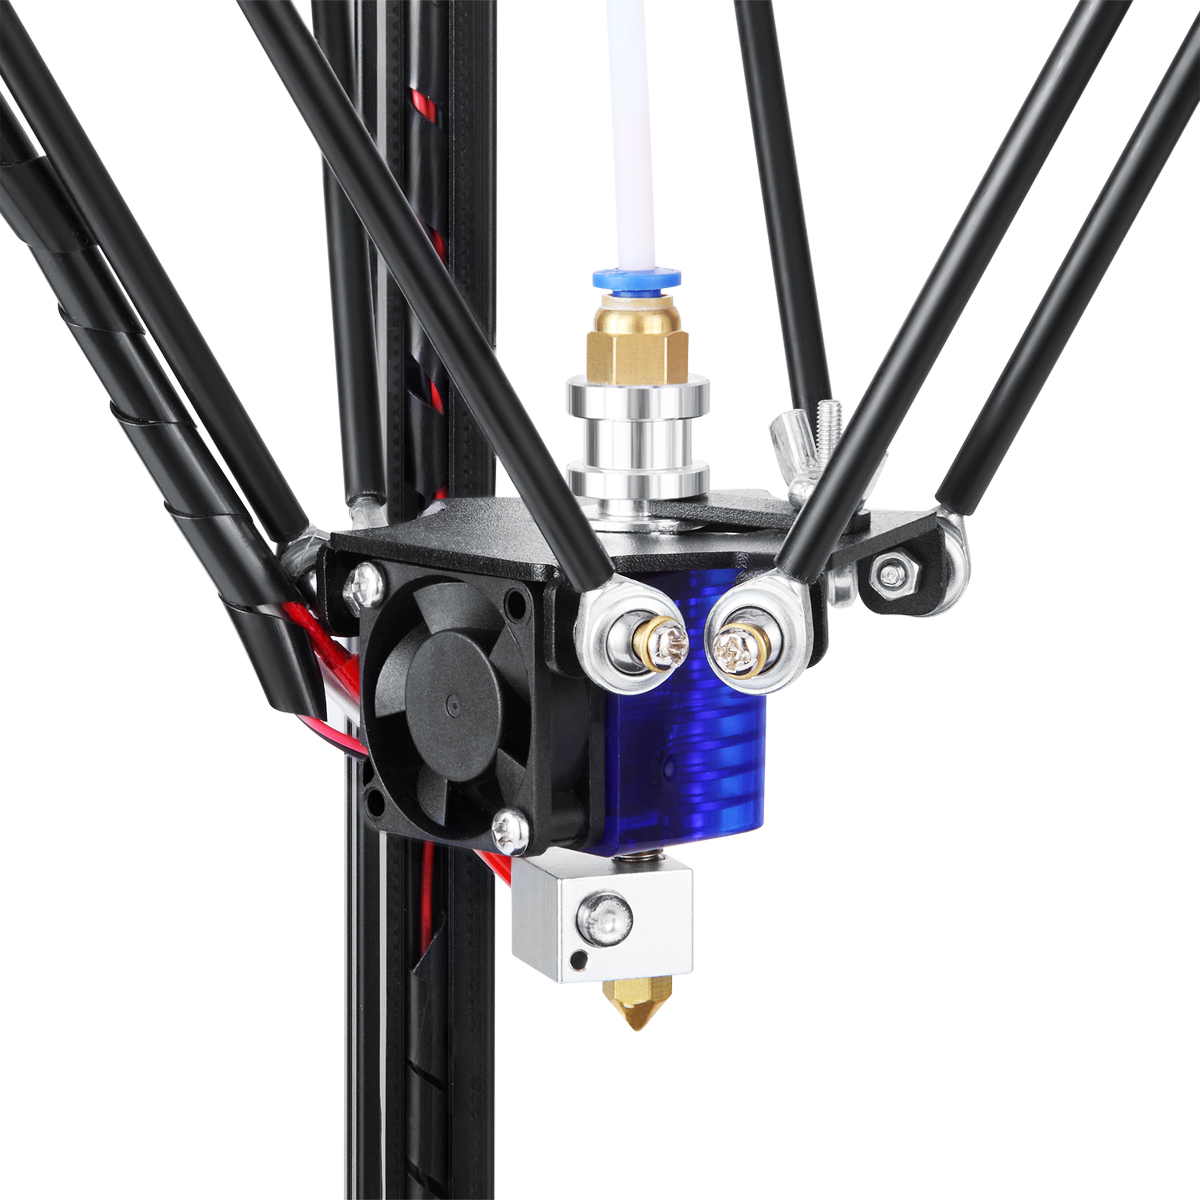 EZT® T1-M+L Delta Kossel 3D Printer DIY Kit 300*320mm Large Printer Size With Laser Engraving/1KG Filament Support Intelligent Leveing/Auto Change Fil 13